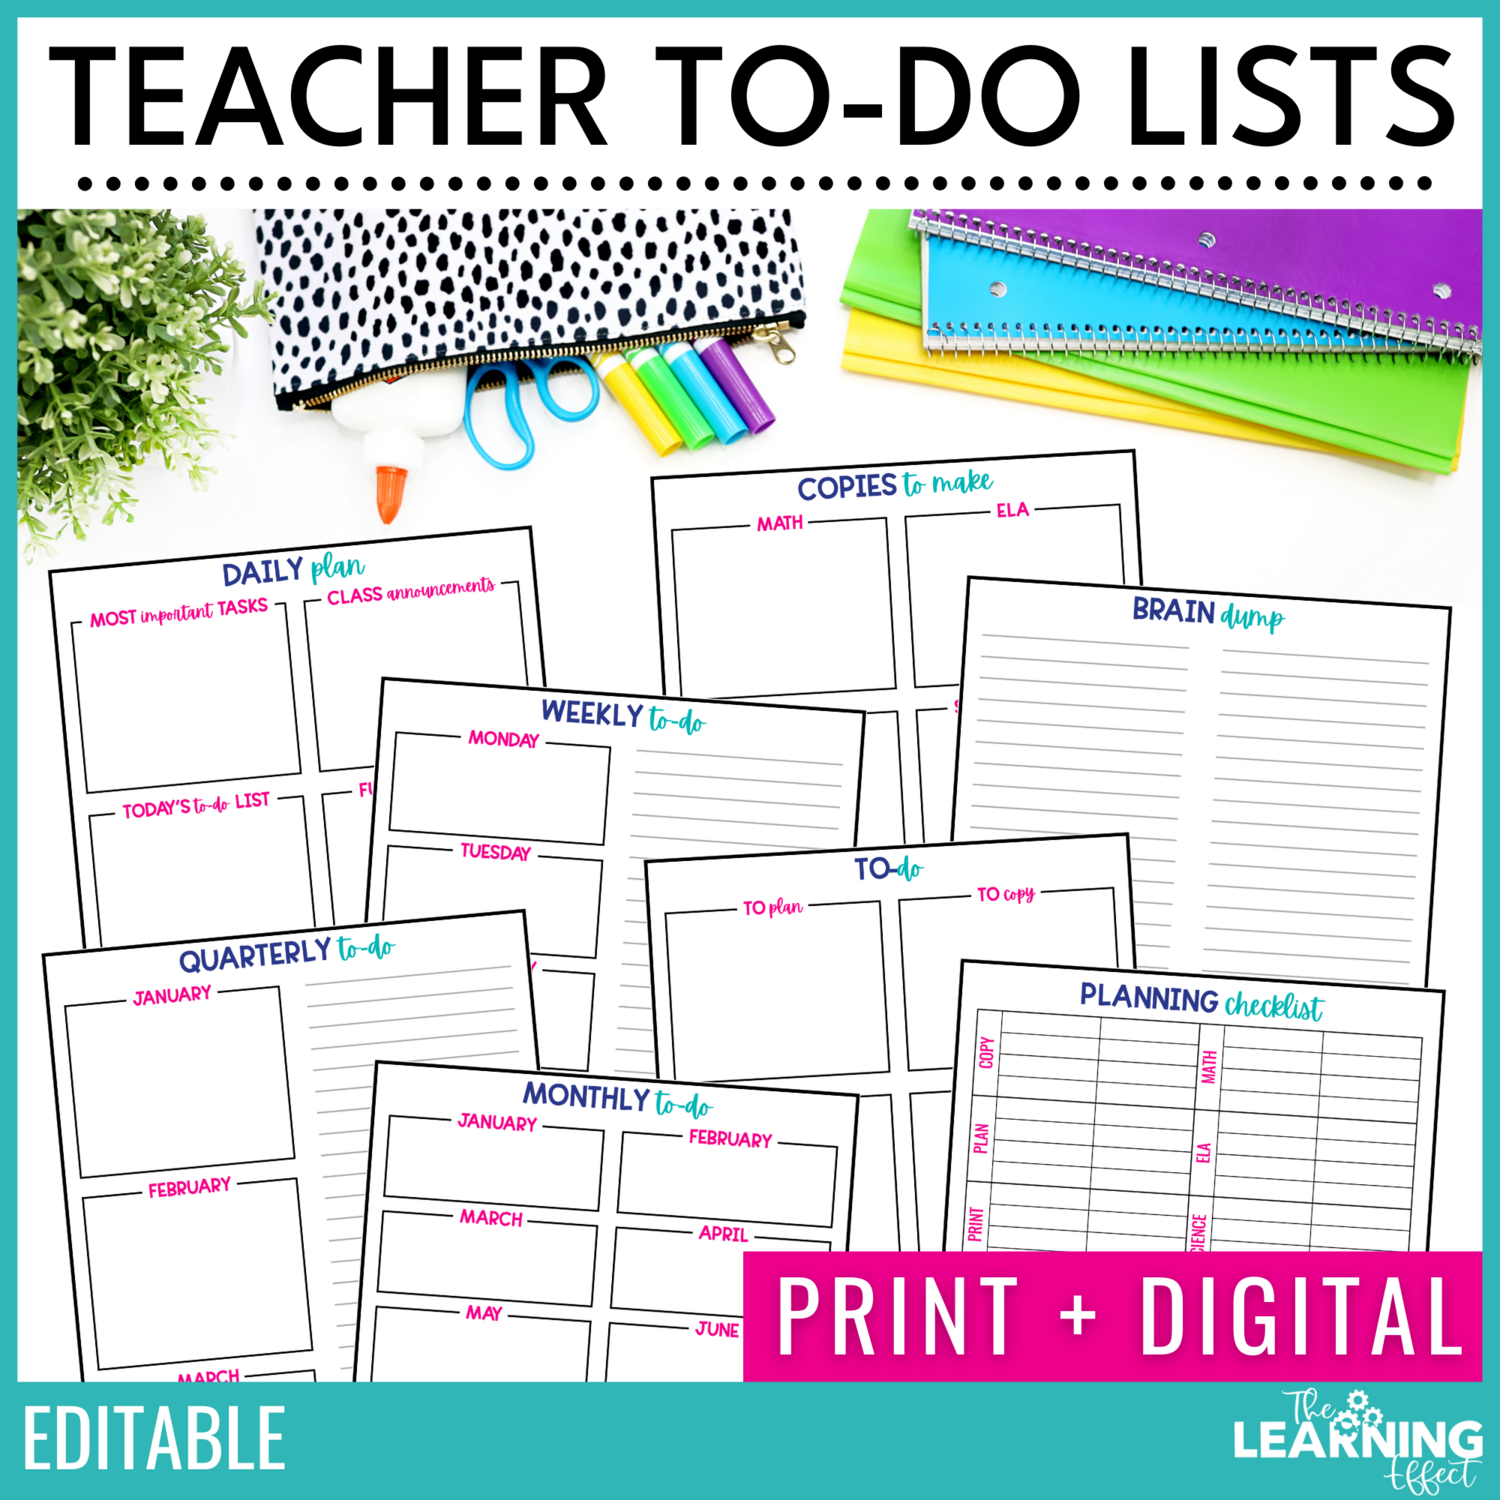 Teacher To-Do Lists, Notes, and Checklists | Editable Printable and Digital